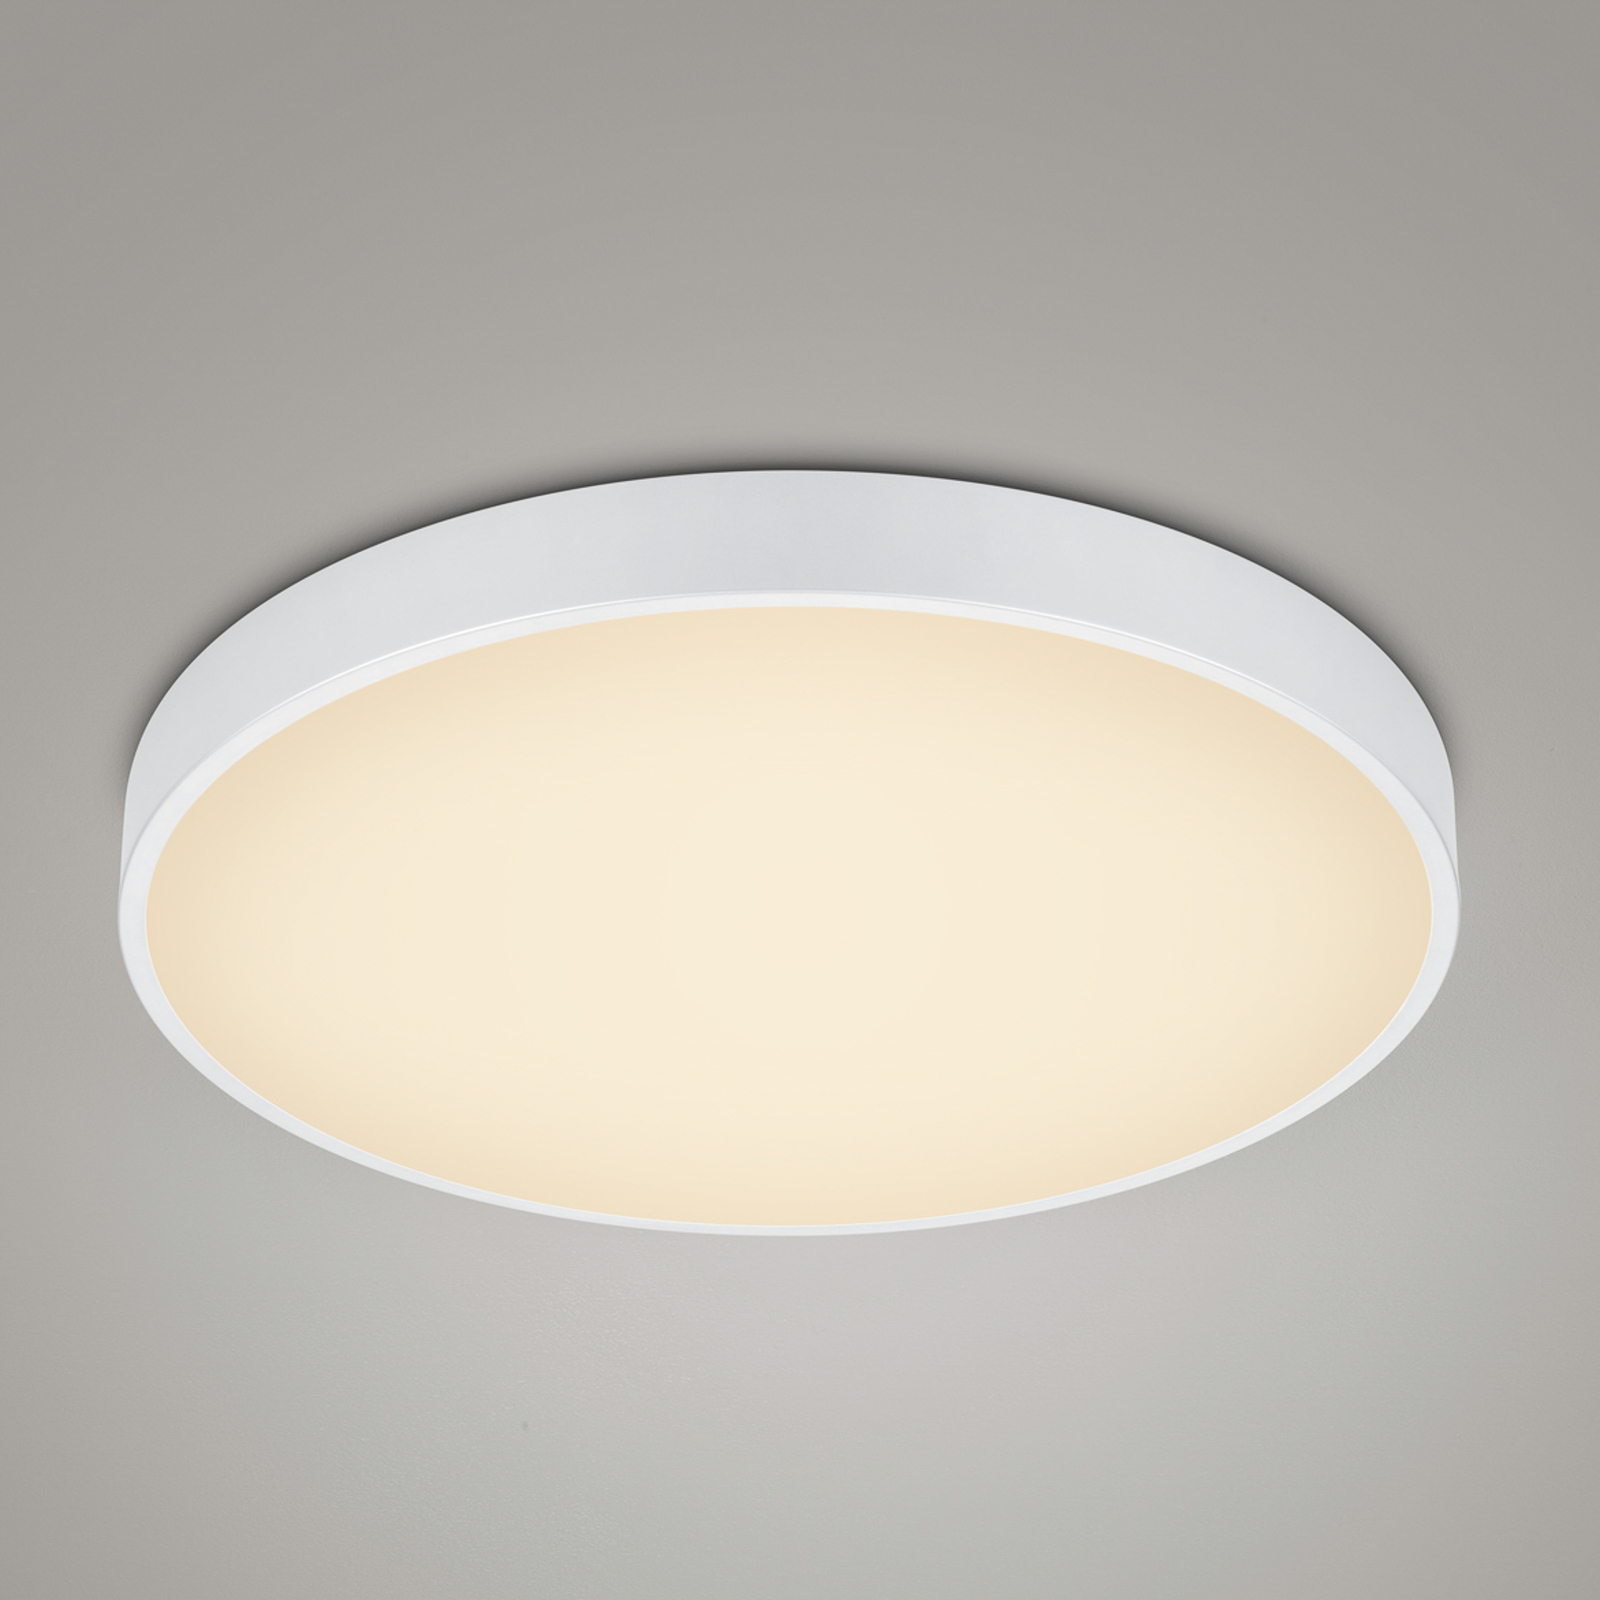 Stropní svítidlo LED Waco, CCT, Ø 49,5 cm, matná bílá